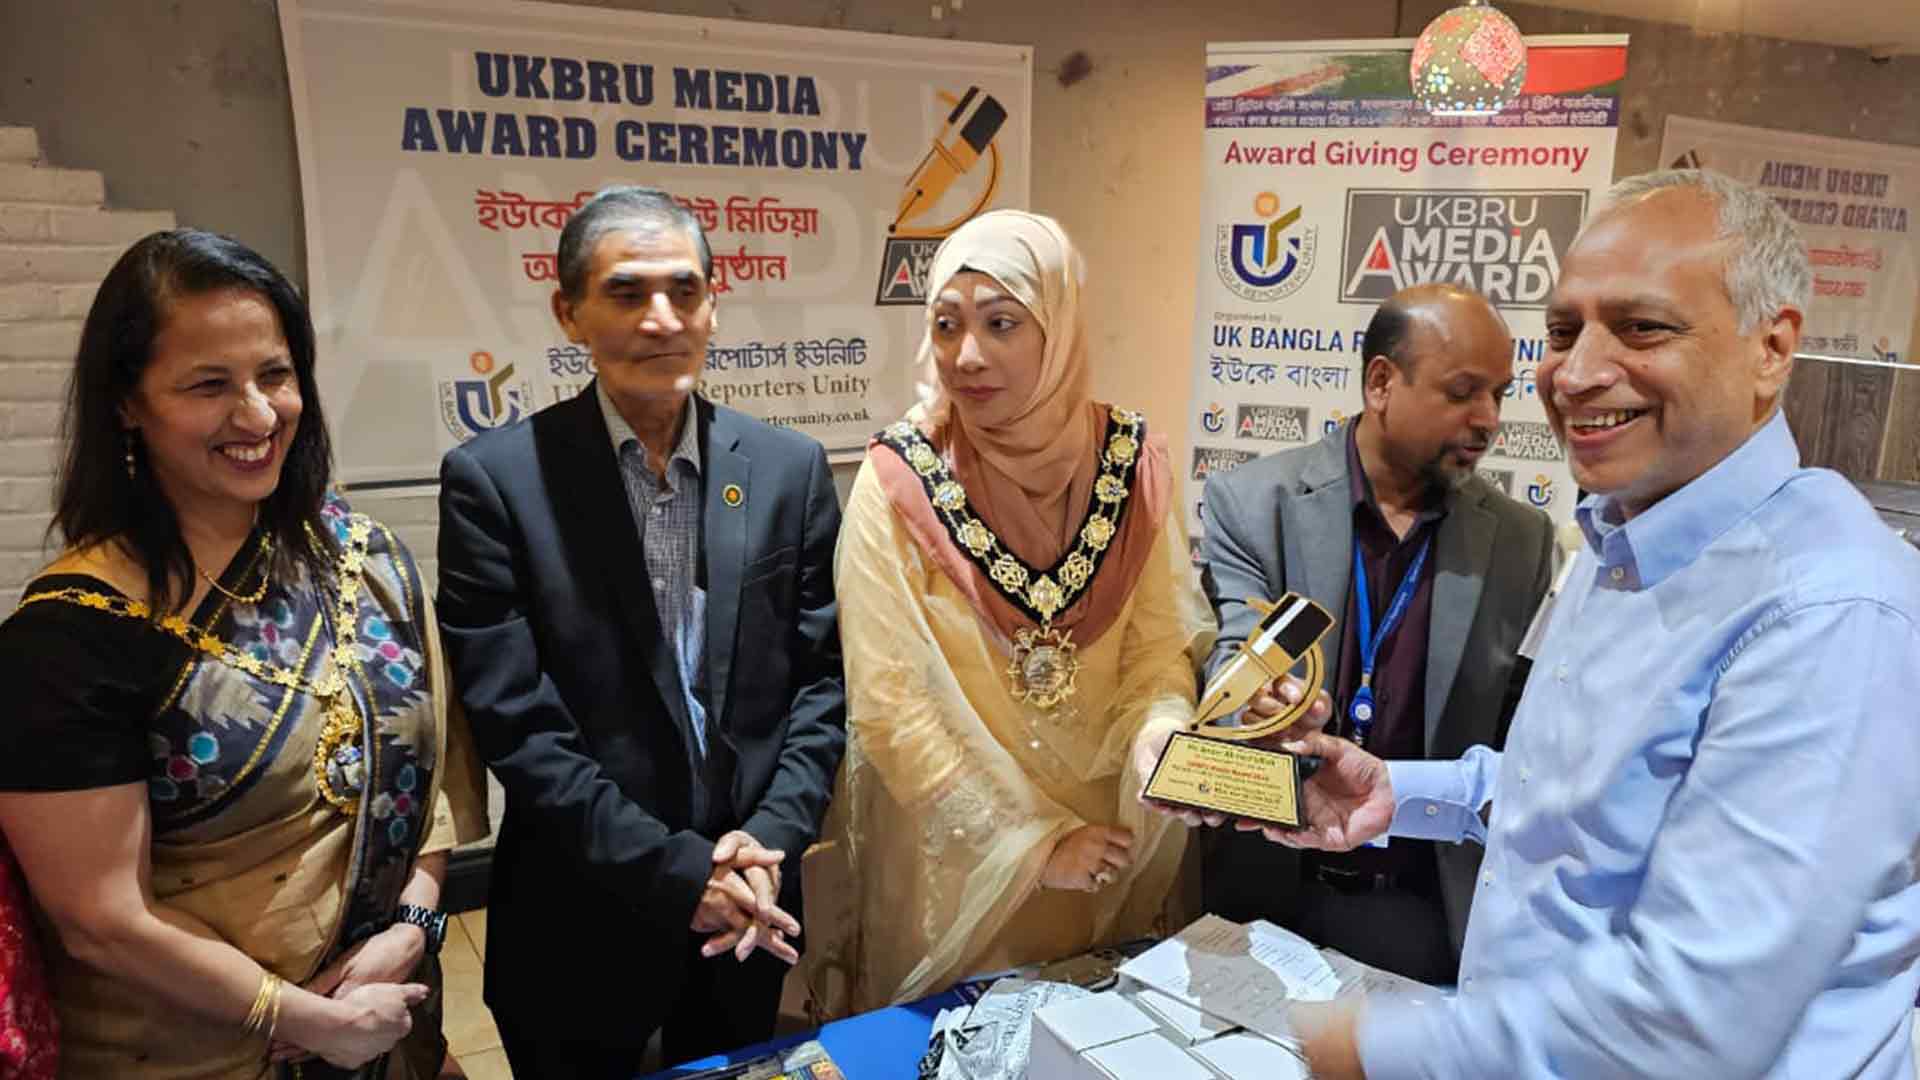 Cinebuzz editor Ansar Ahmed Ullah honoured with UKBRU Award 2022